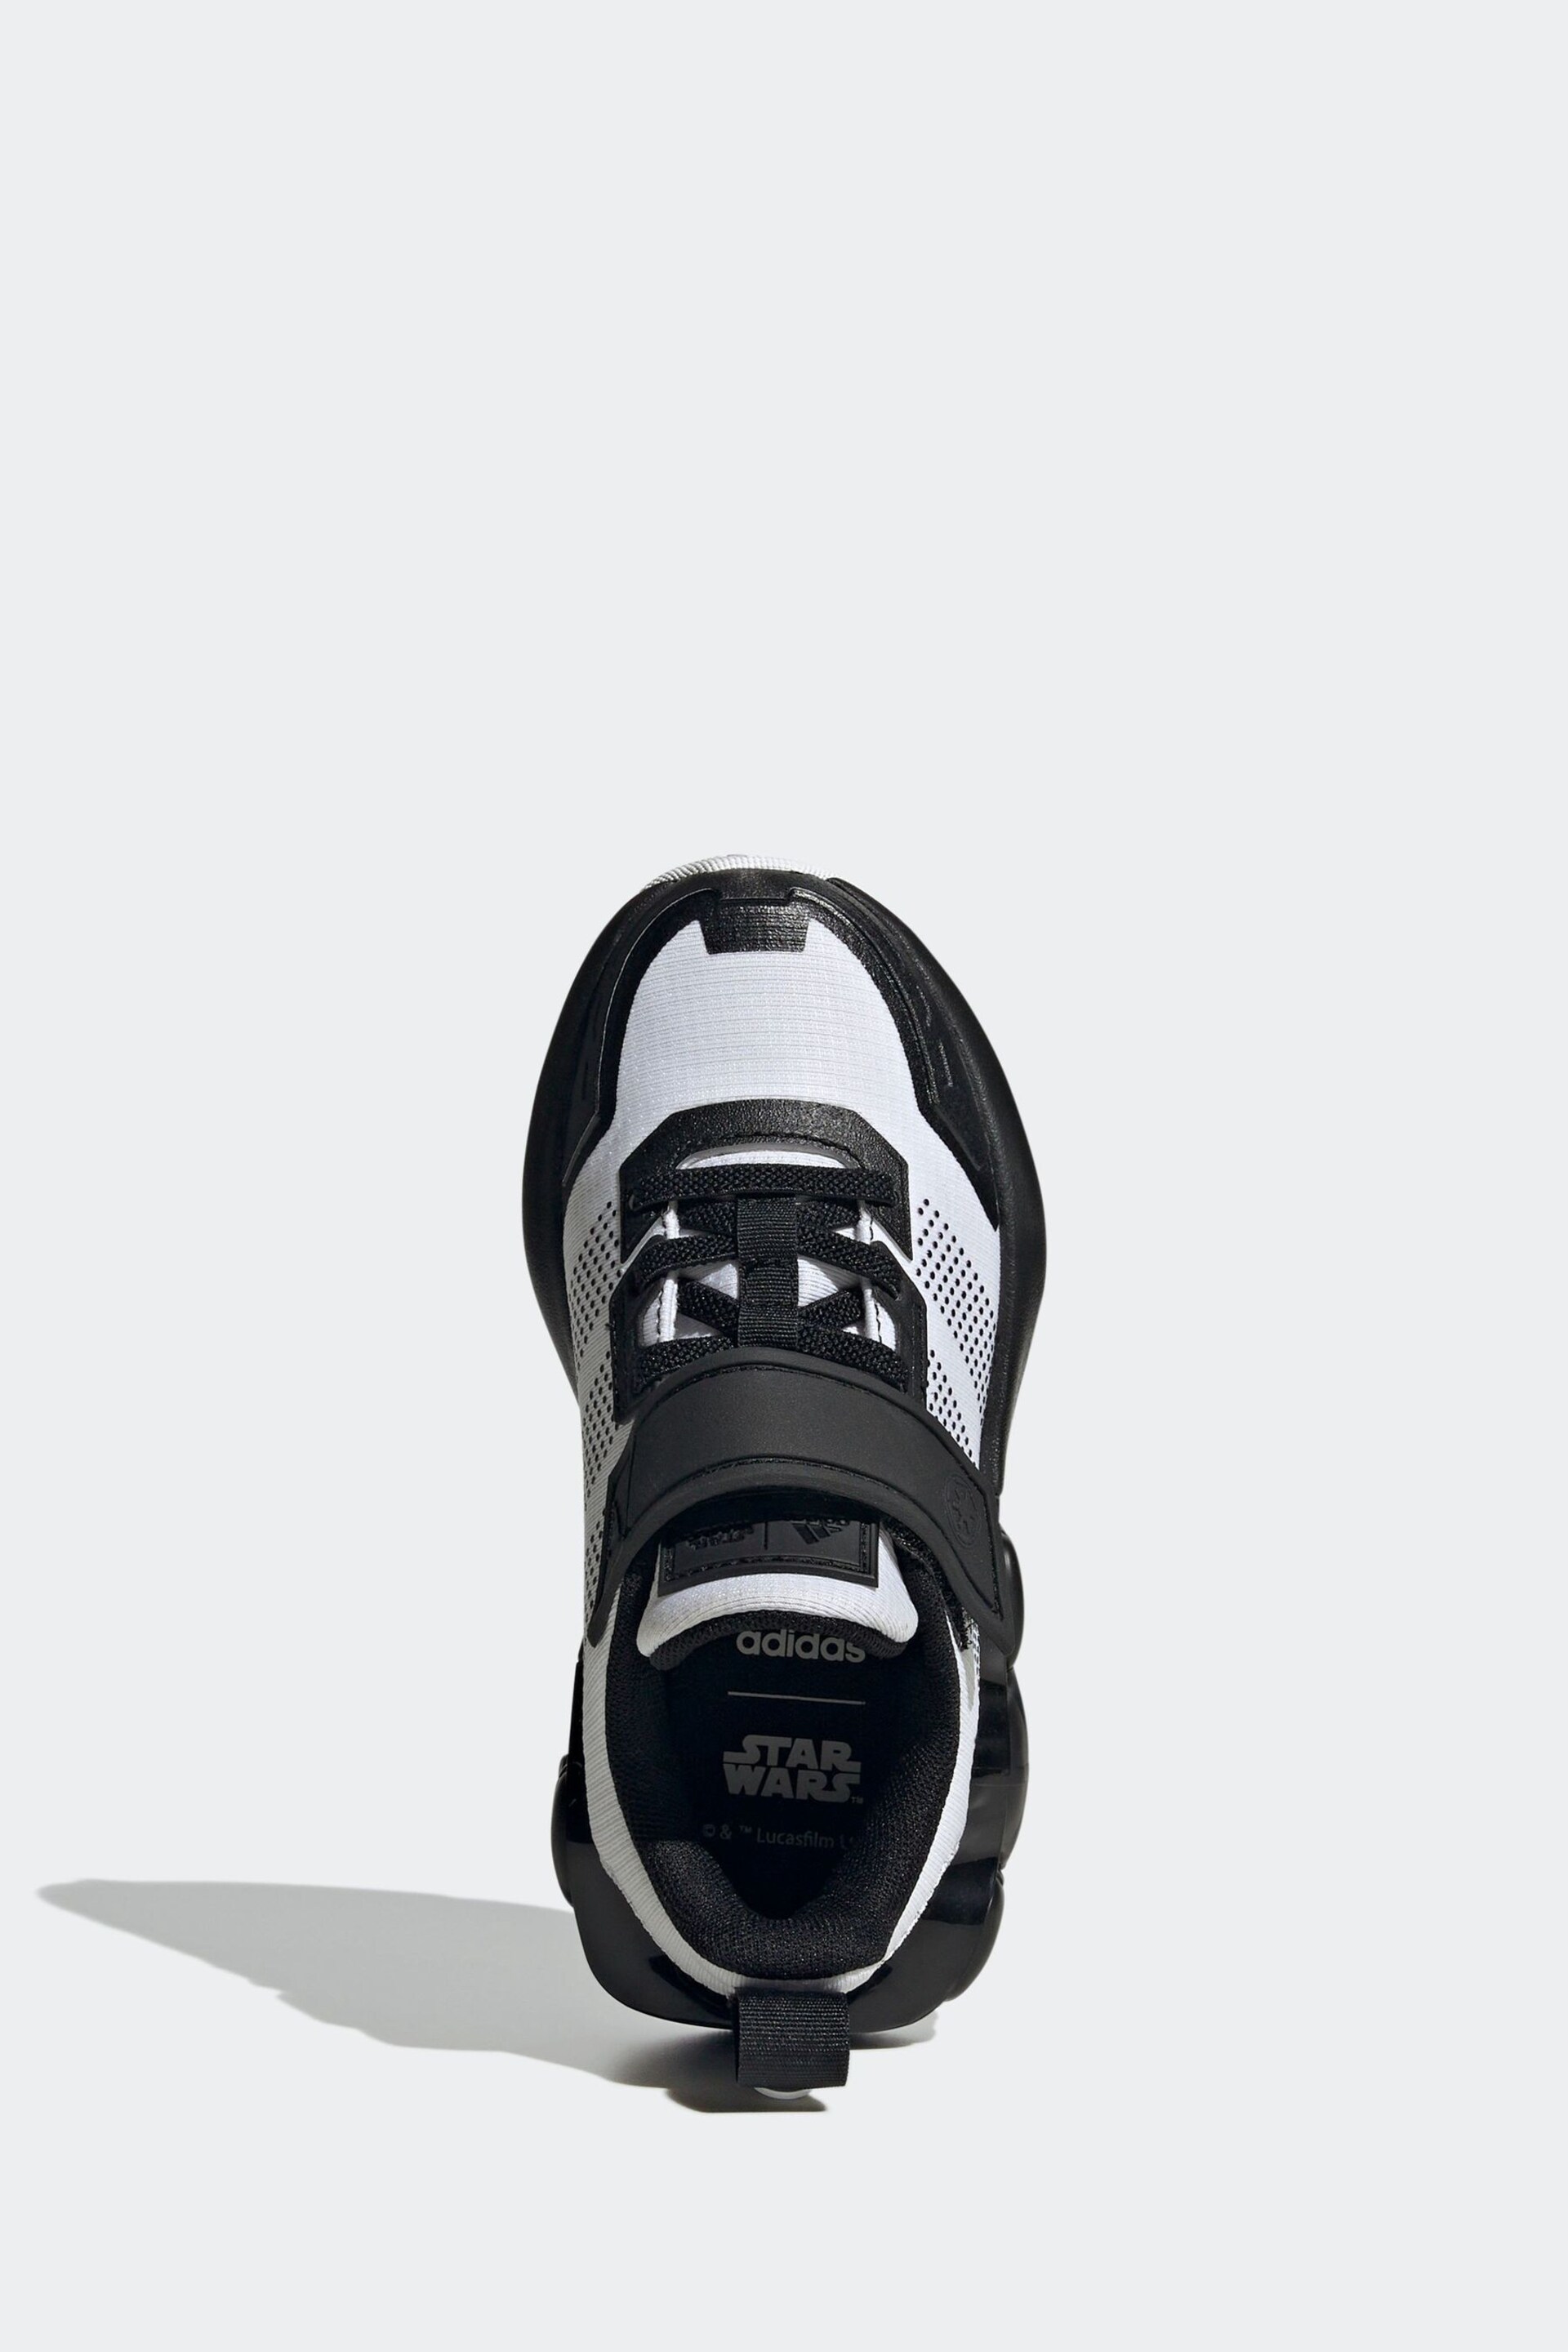 adidas Black Sportswear Star Wars Runner Trainers - Image 5 of 9